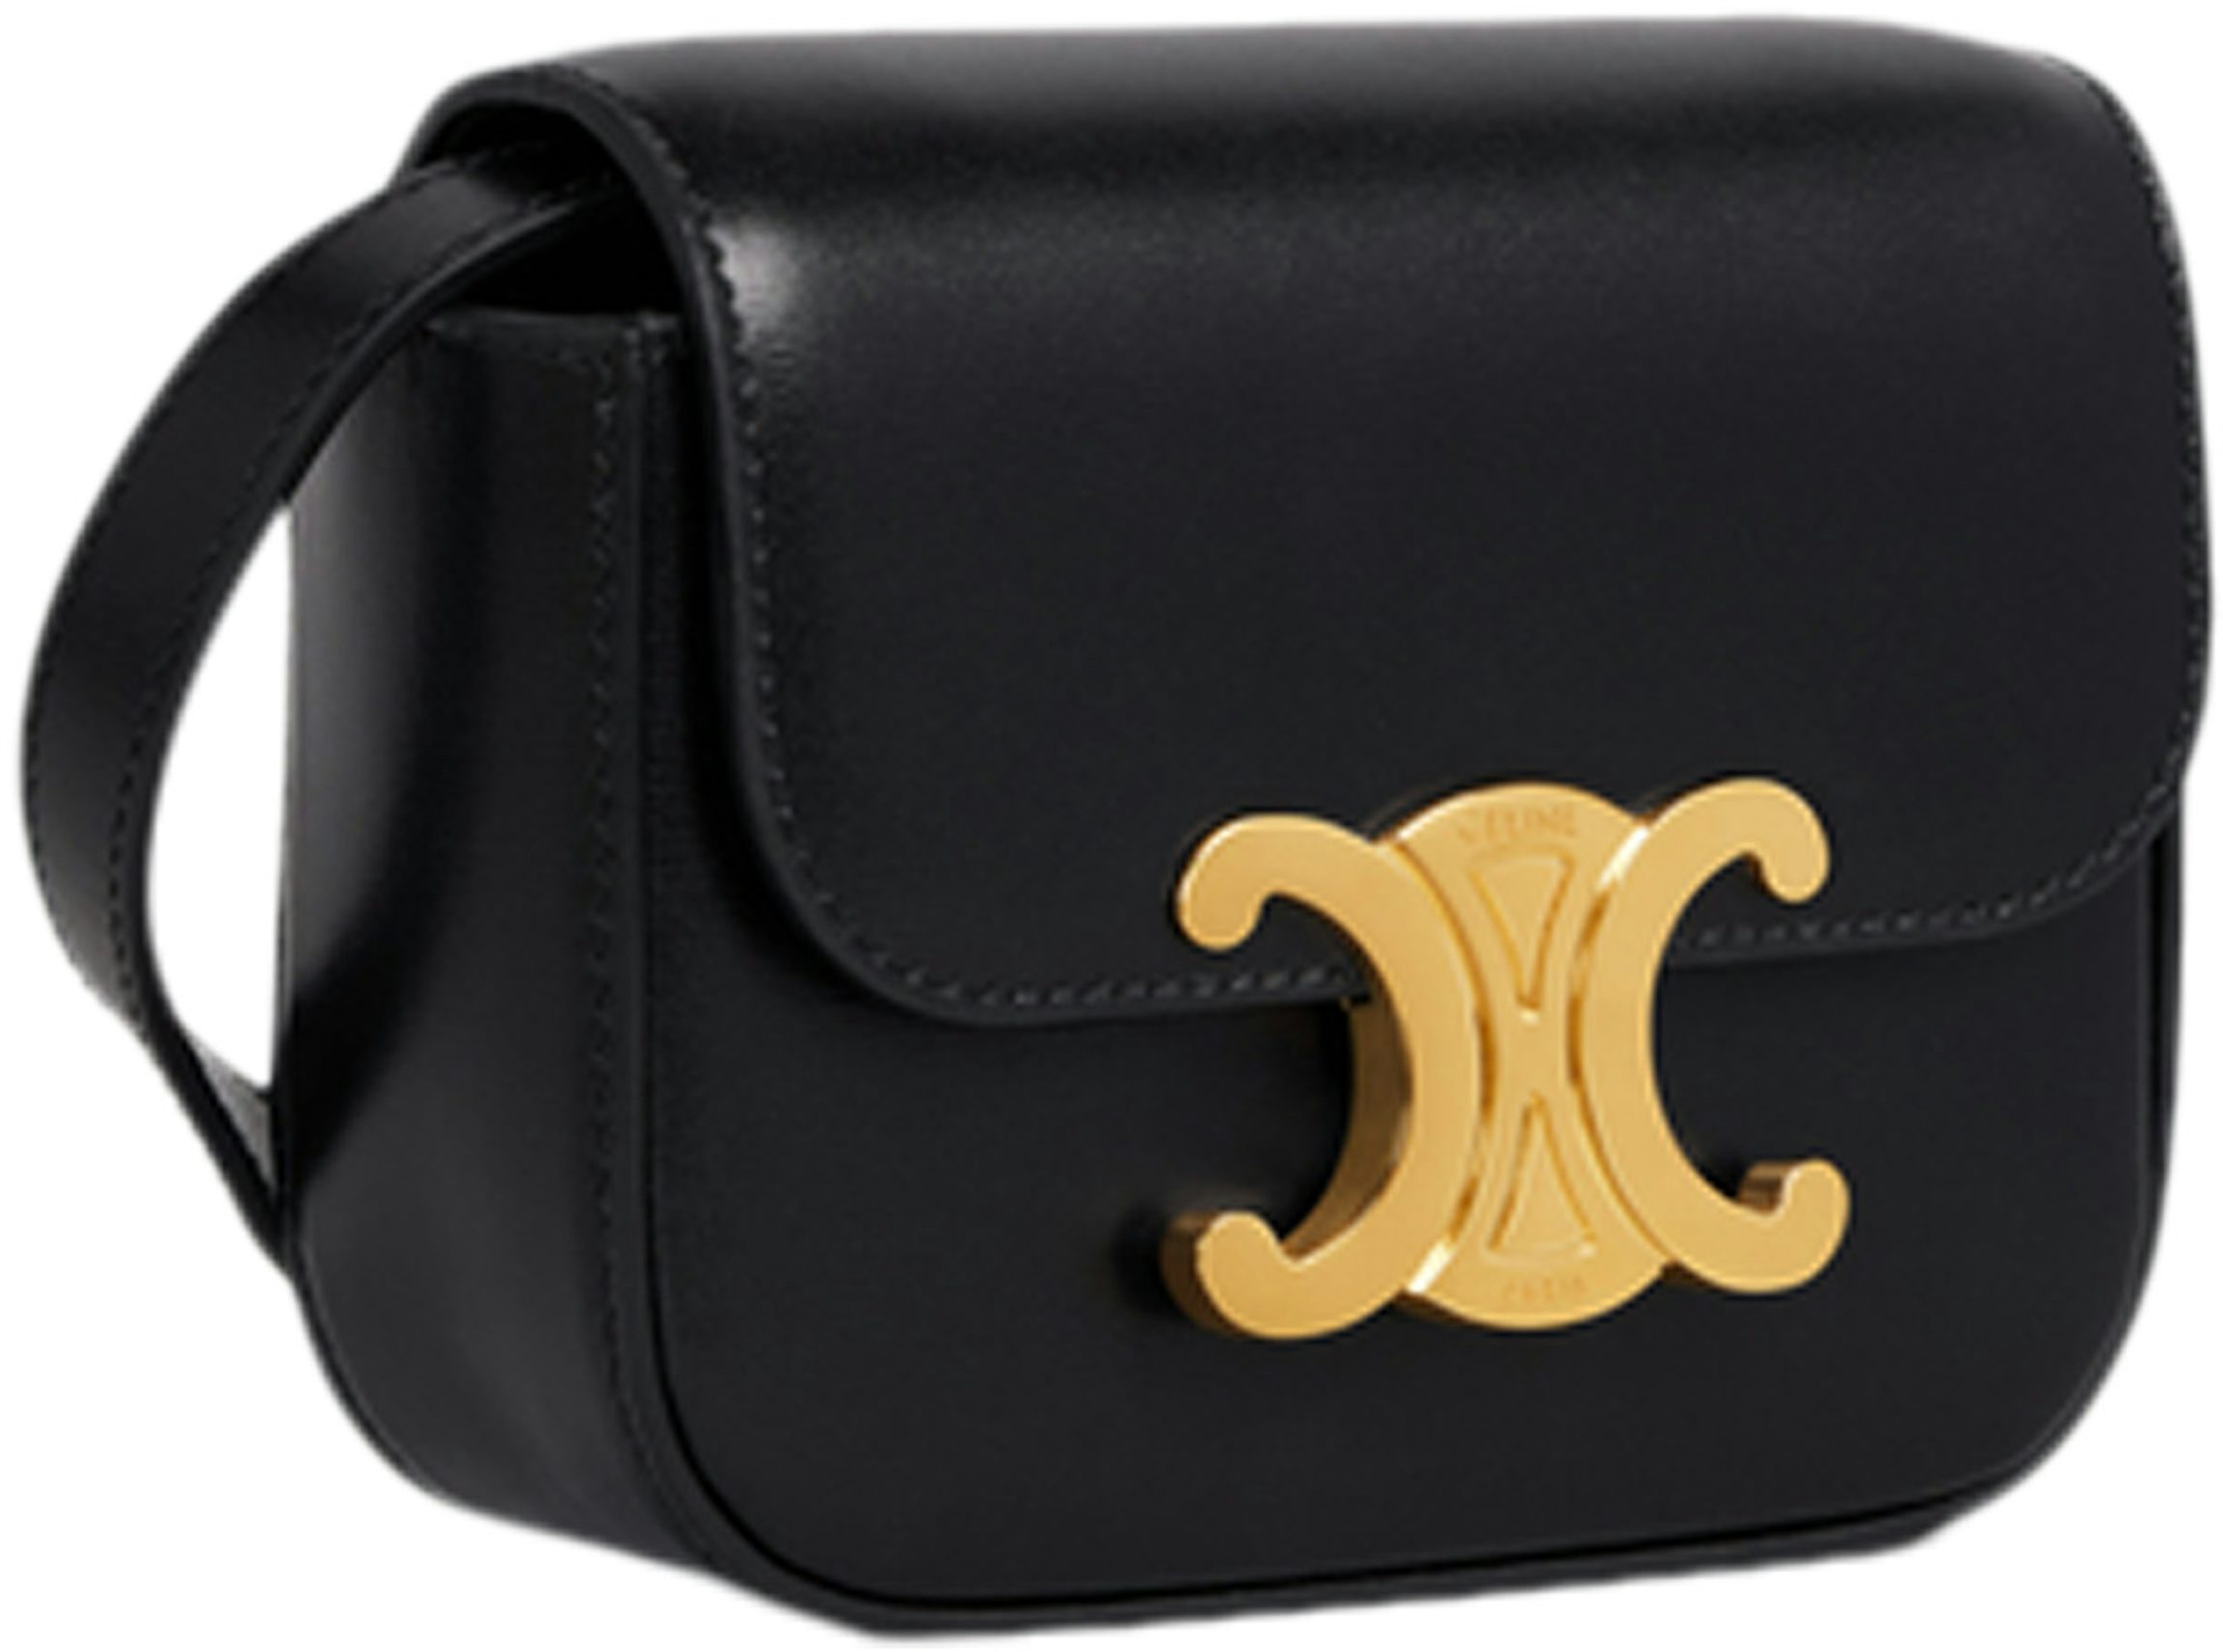 Celine Triomphe Shoulder Bag Black in Shiny Calfskin Leather with Gold-tone  - US